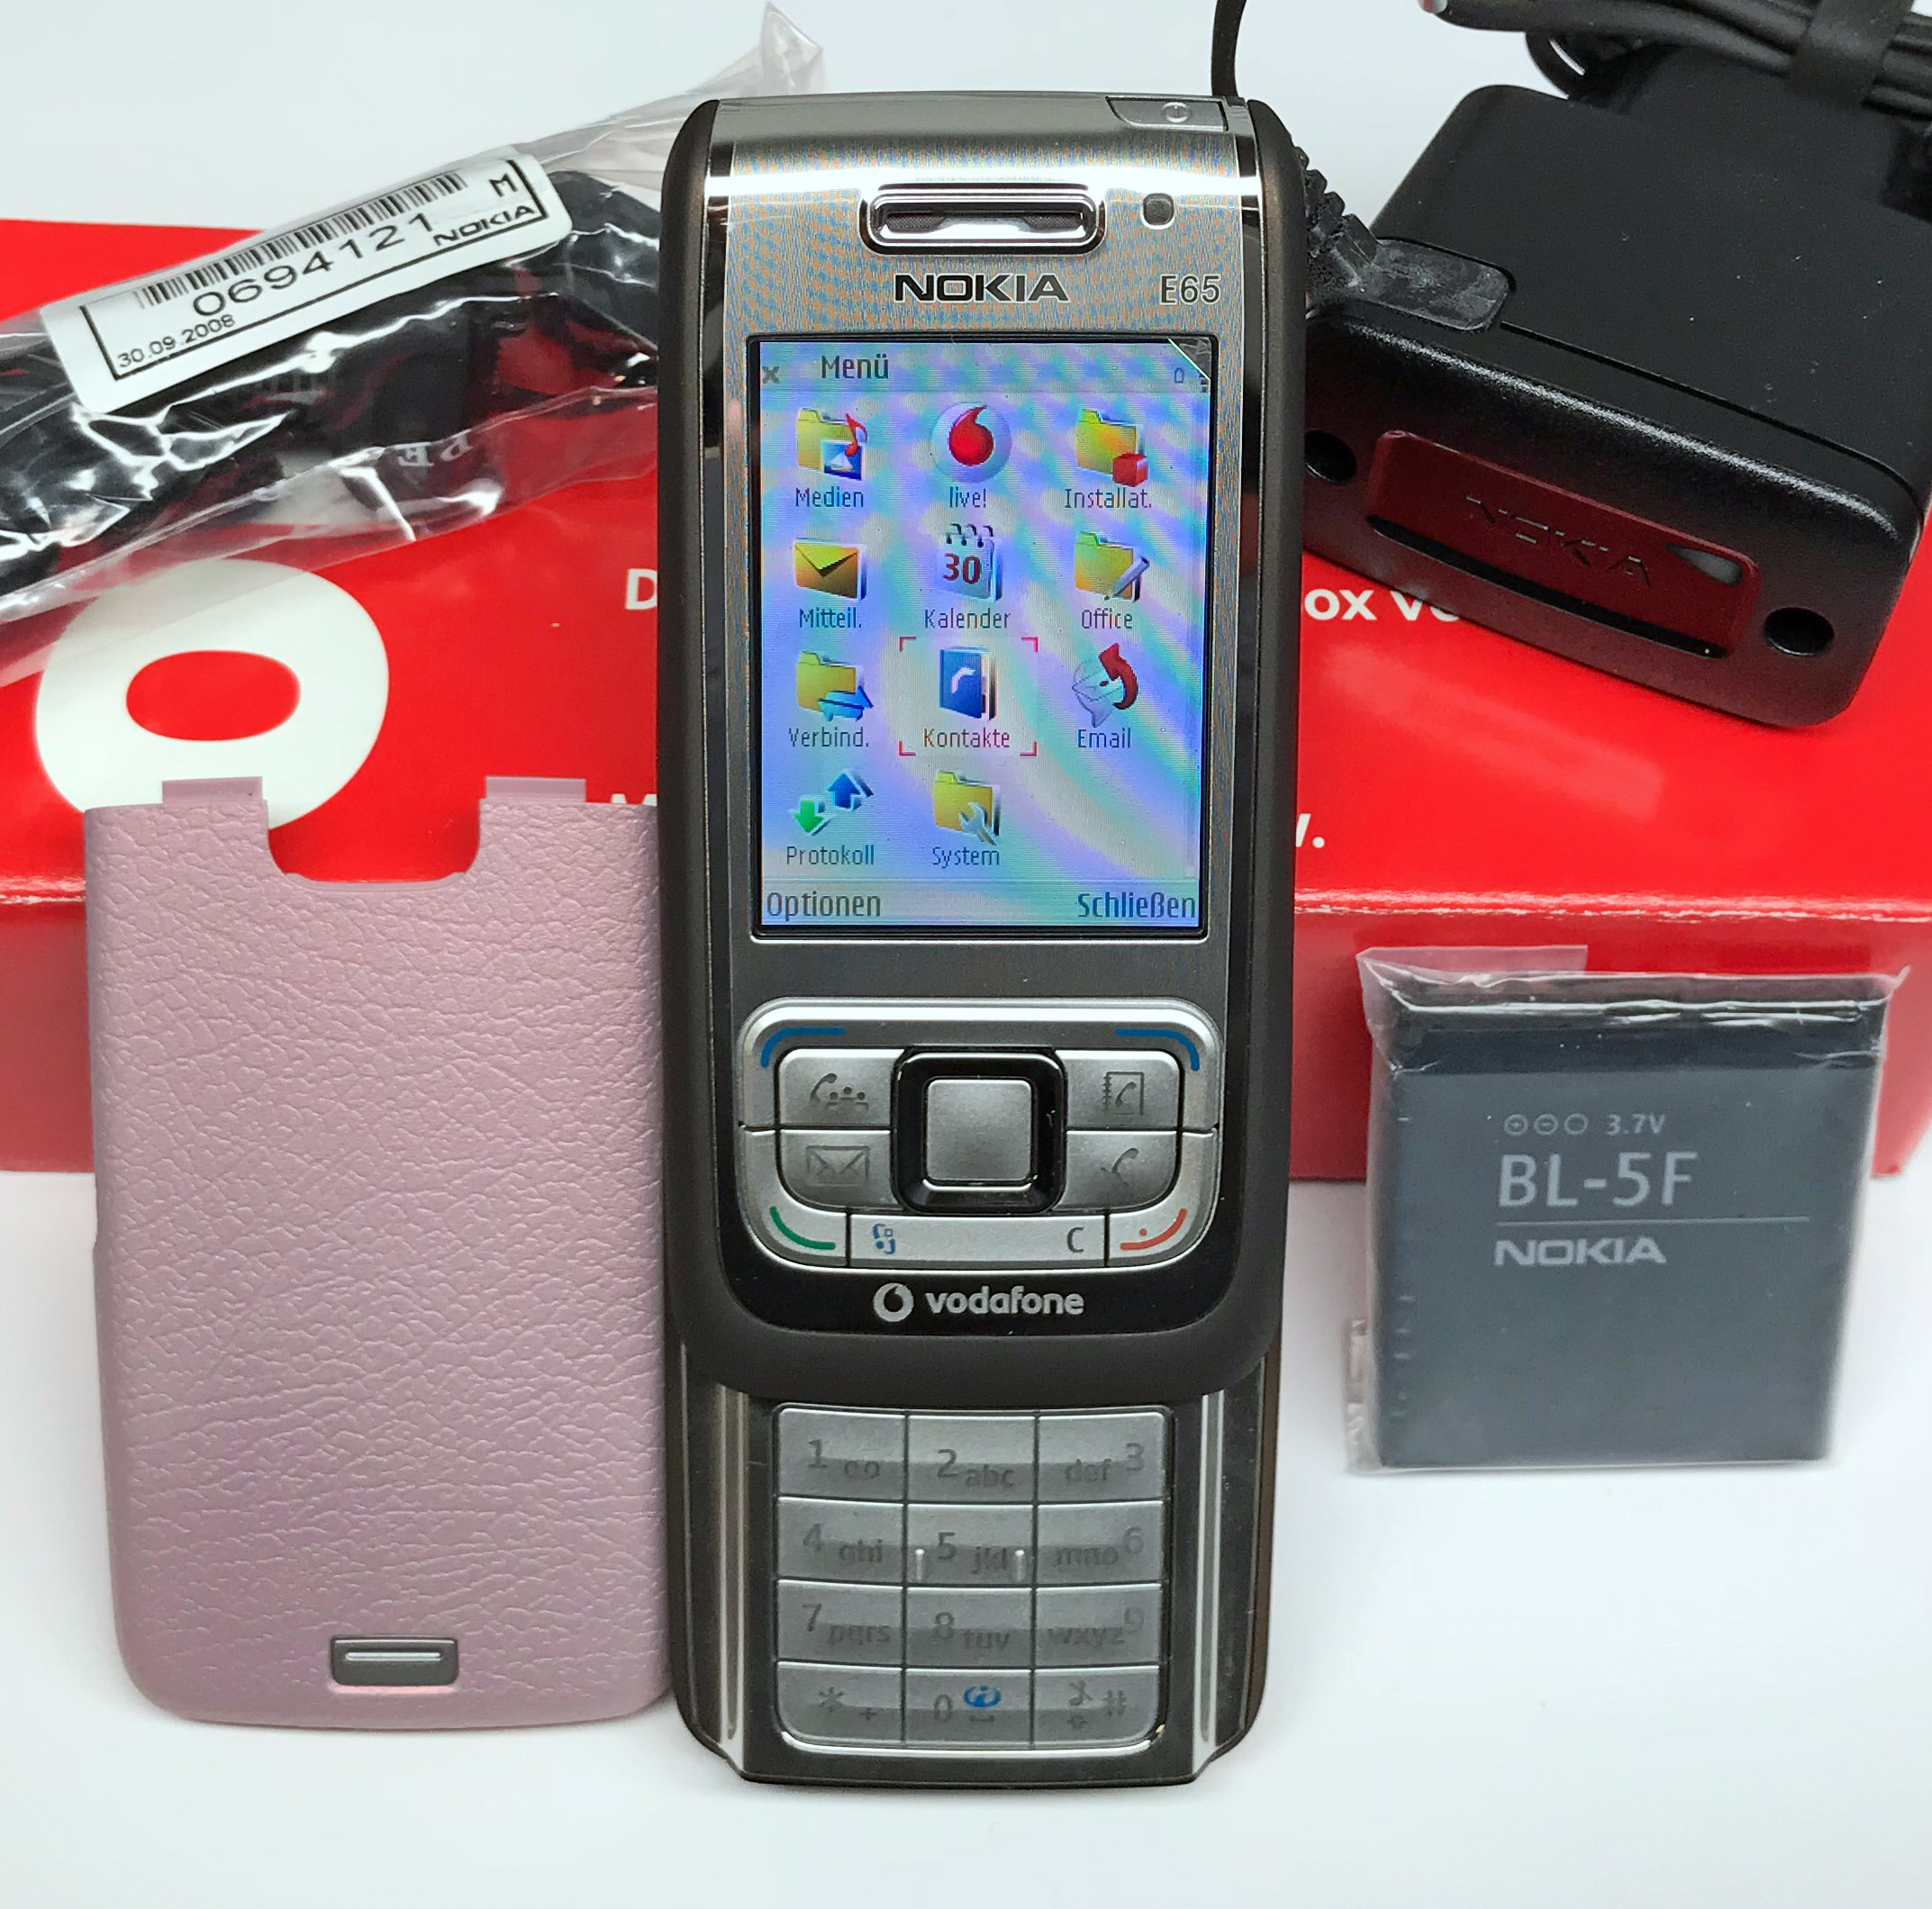  Nokia  e65 Slider  Mobile Phone  Smartphone Unlocked 